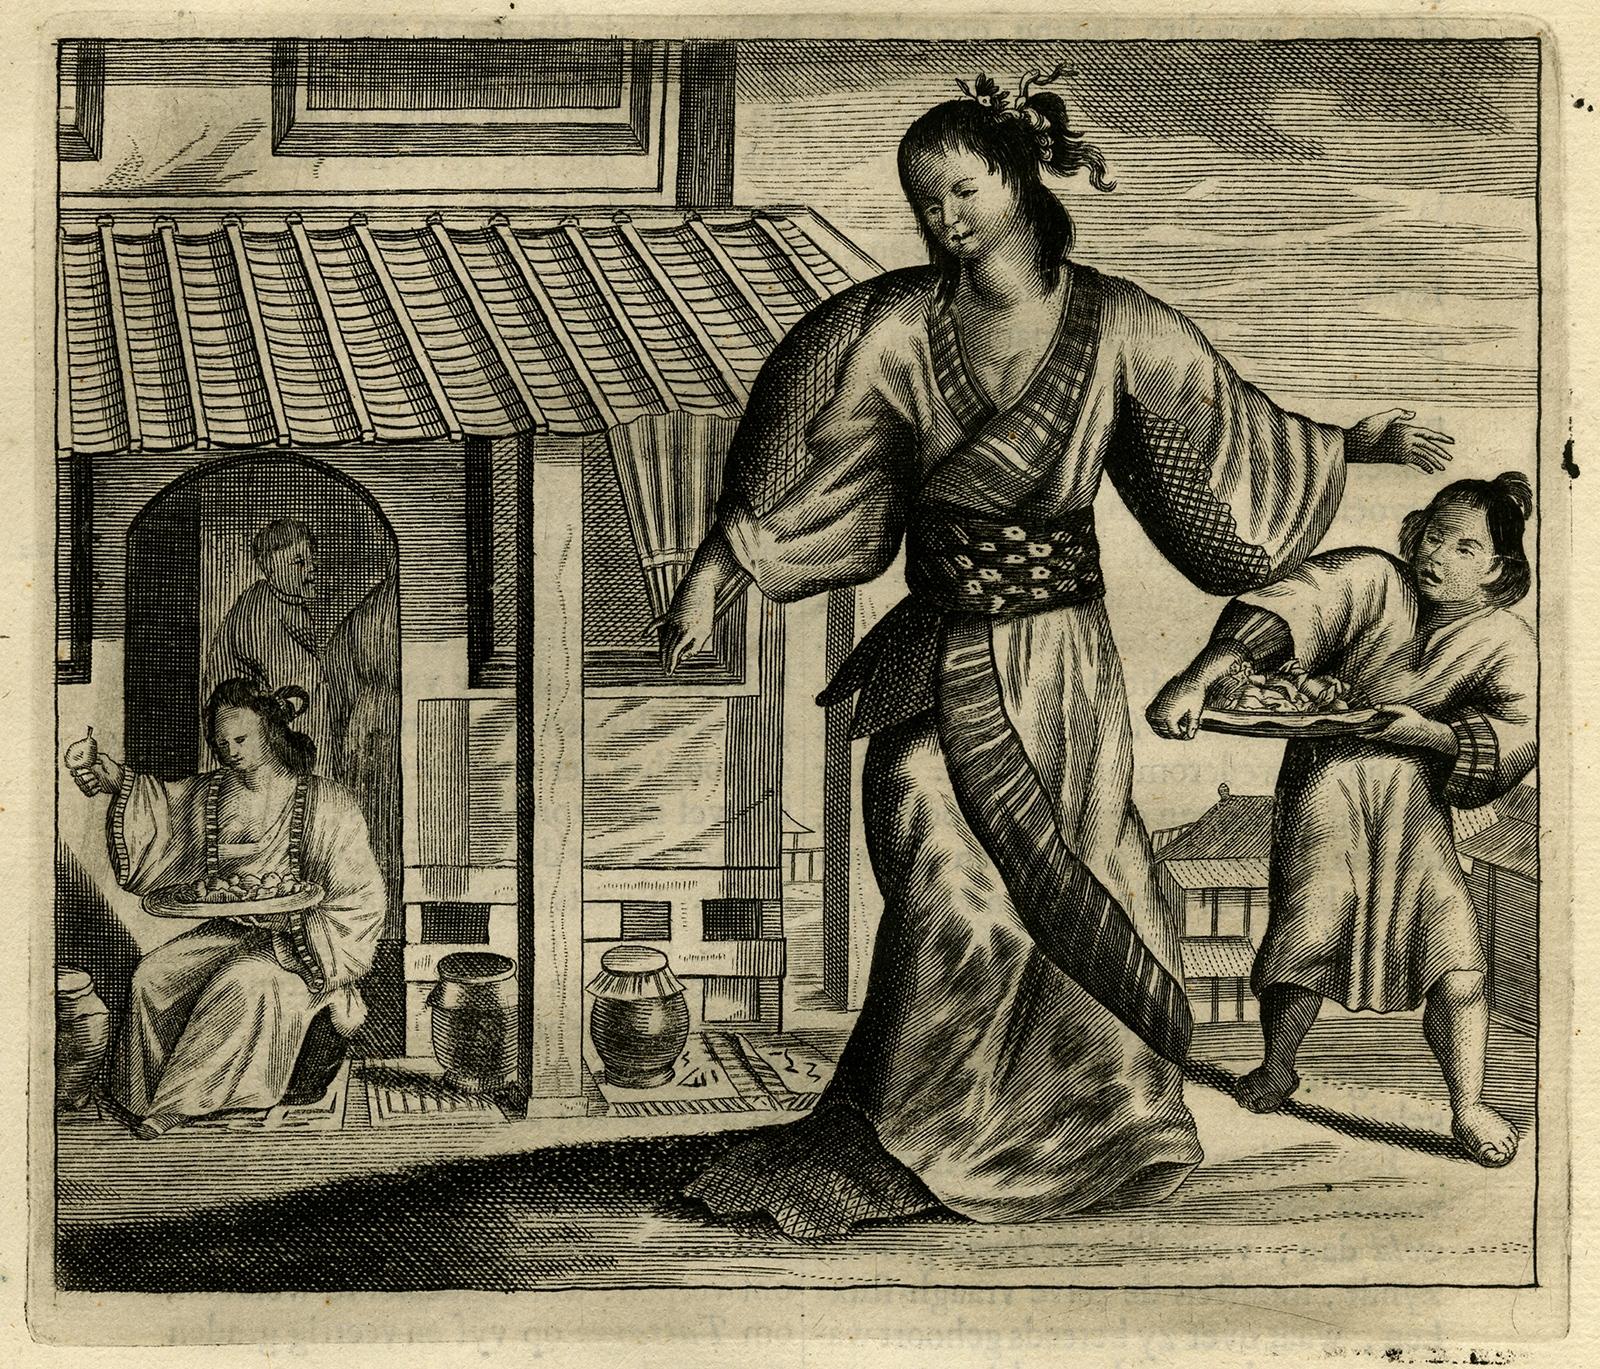 Antique print, titled: 'Beschryving van een Japansche hoer.' - ('Description of a Japanese prostitute'). 

Full-length portrait of a prostitute in kimono. Arnoldus Montanus' 